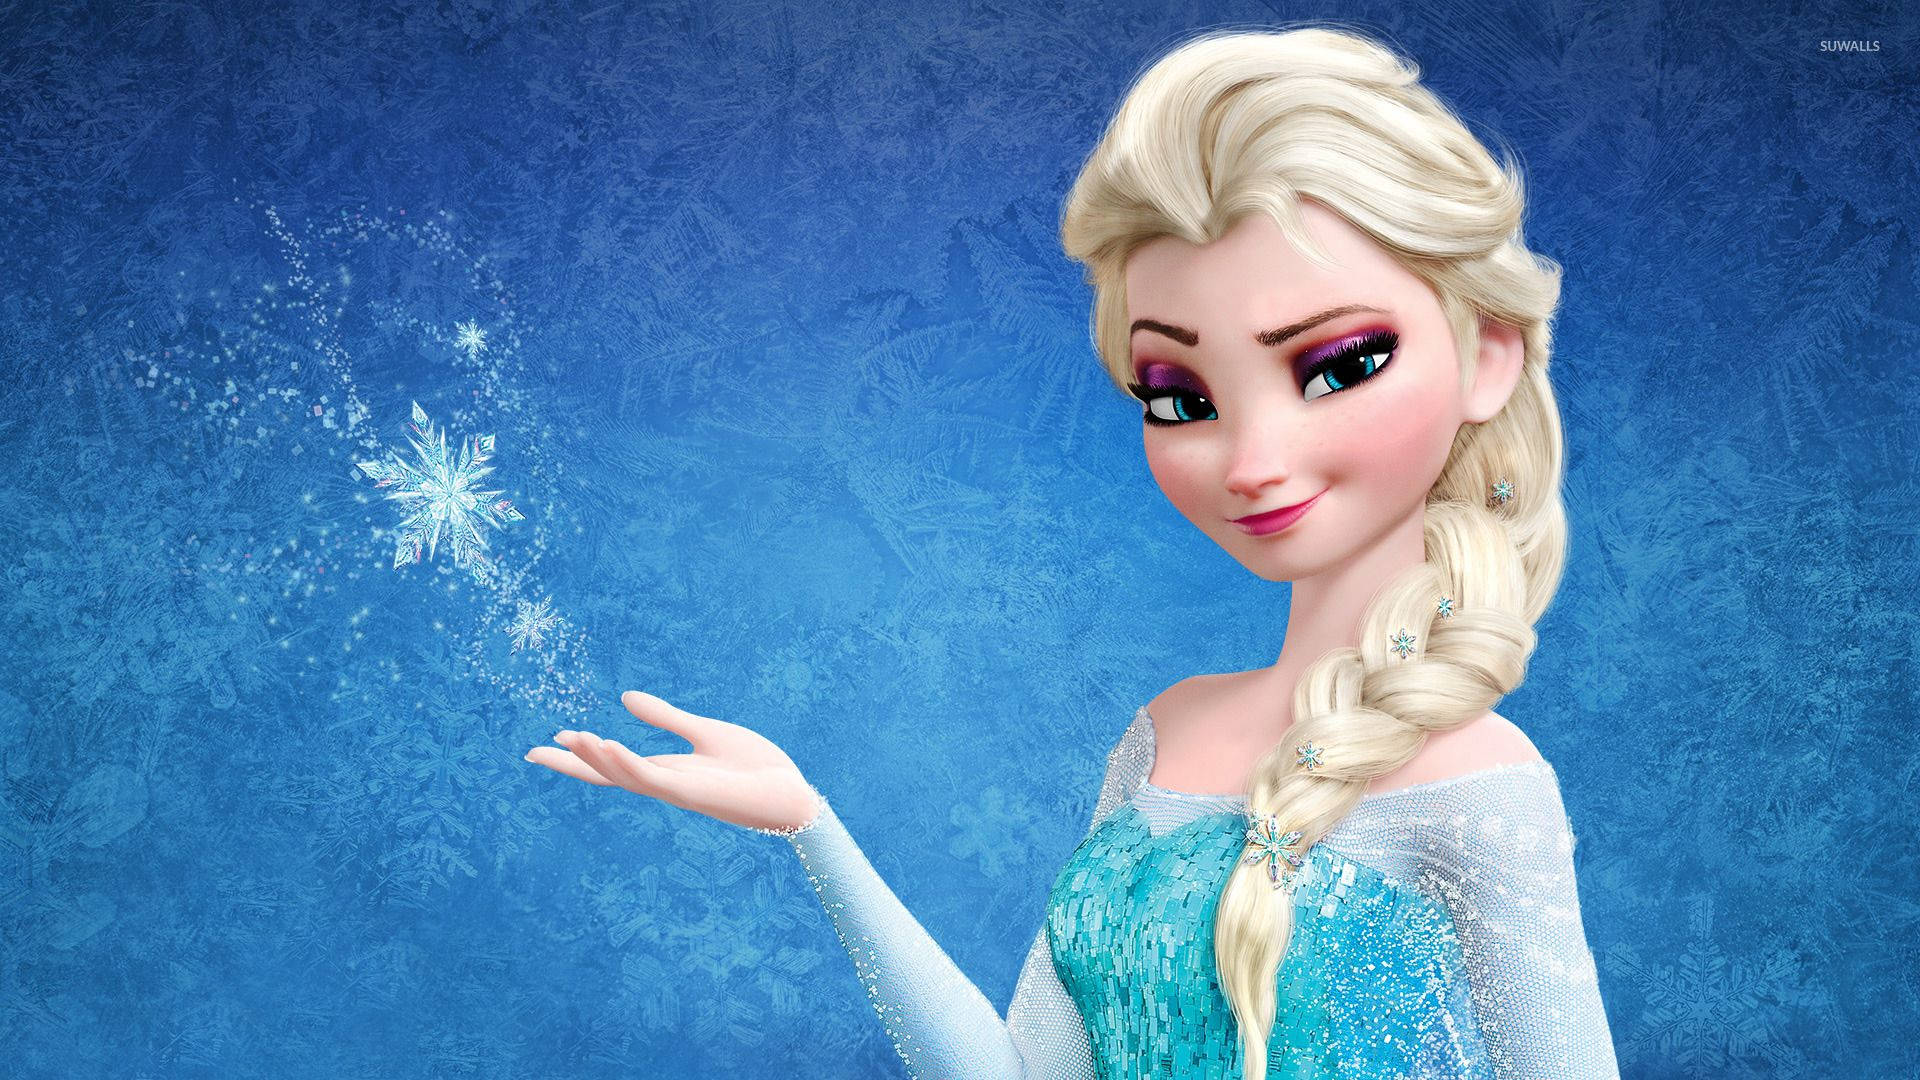 Queen Elsa from Disney's Frozen 2 Fights the Elements in All Her Glory Wallpaper